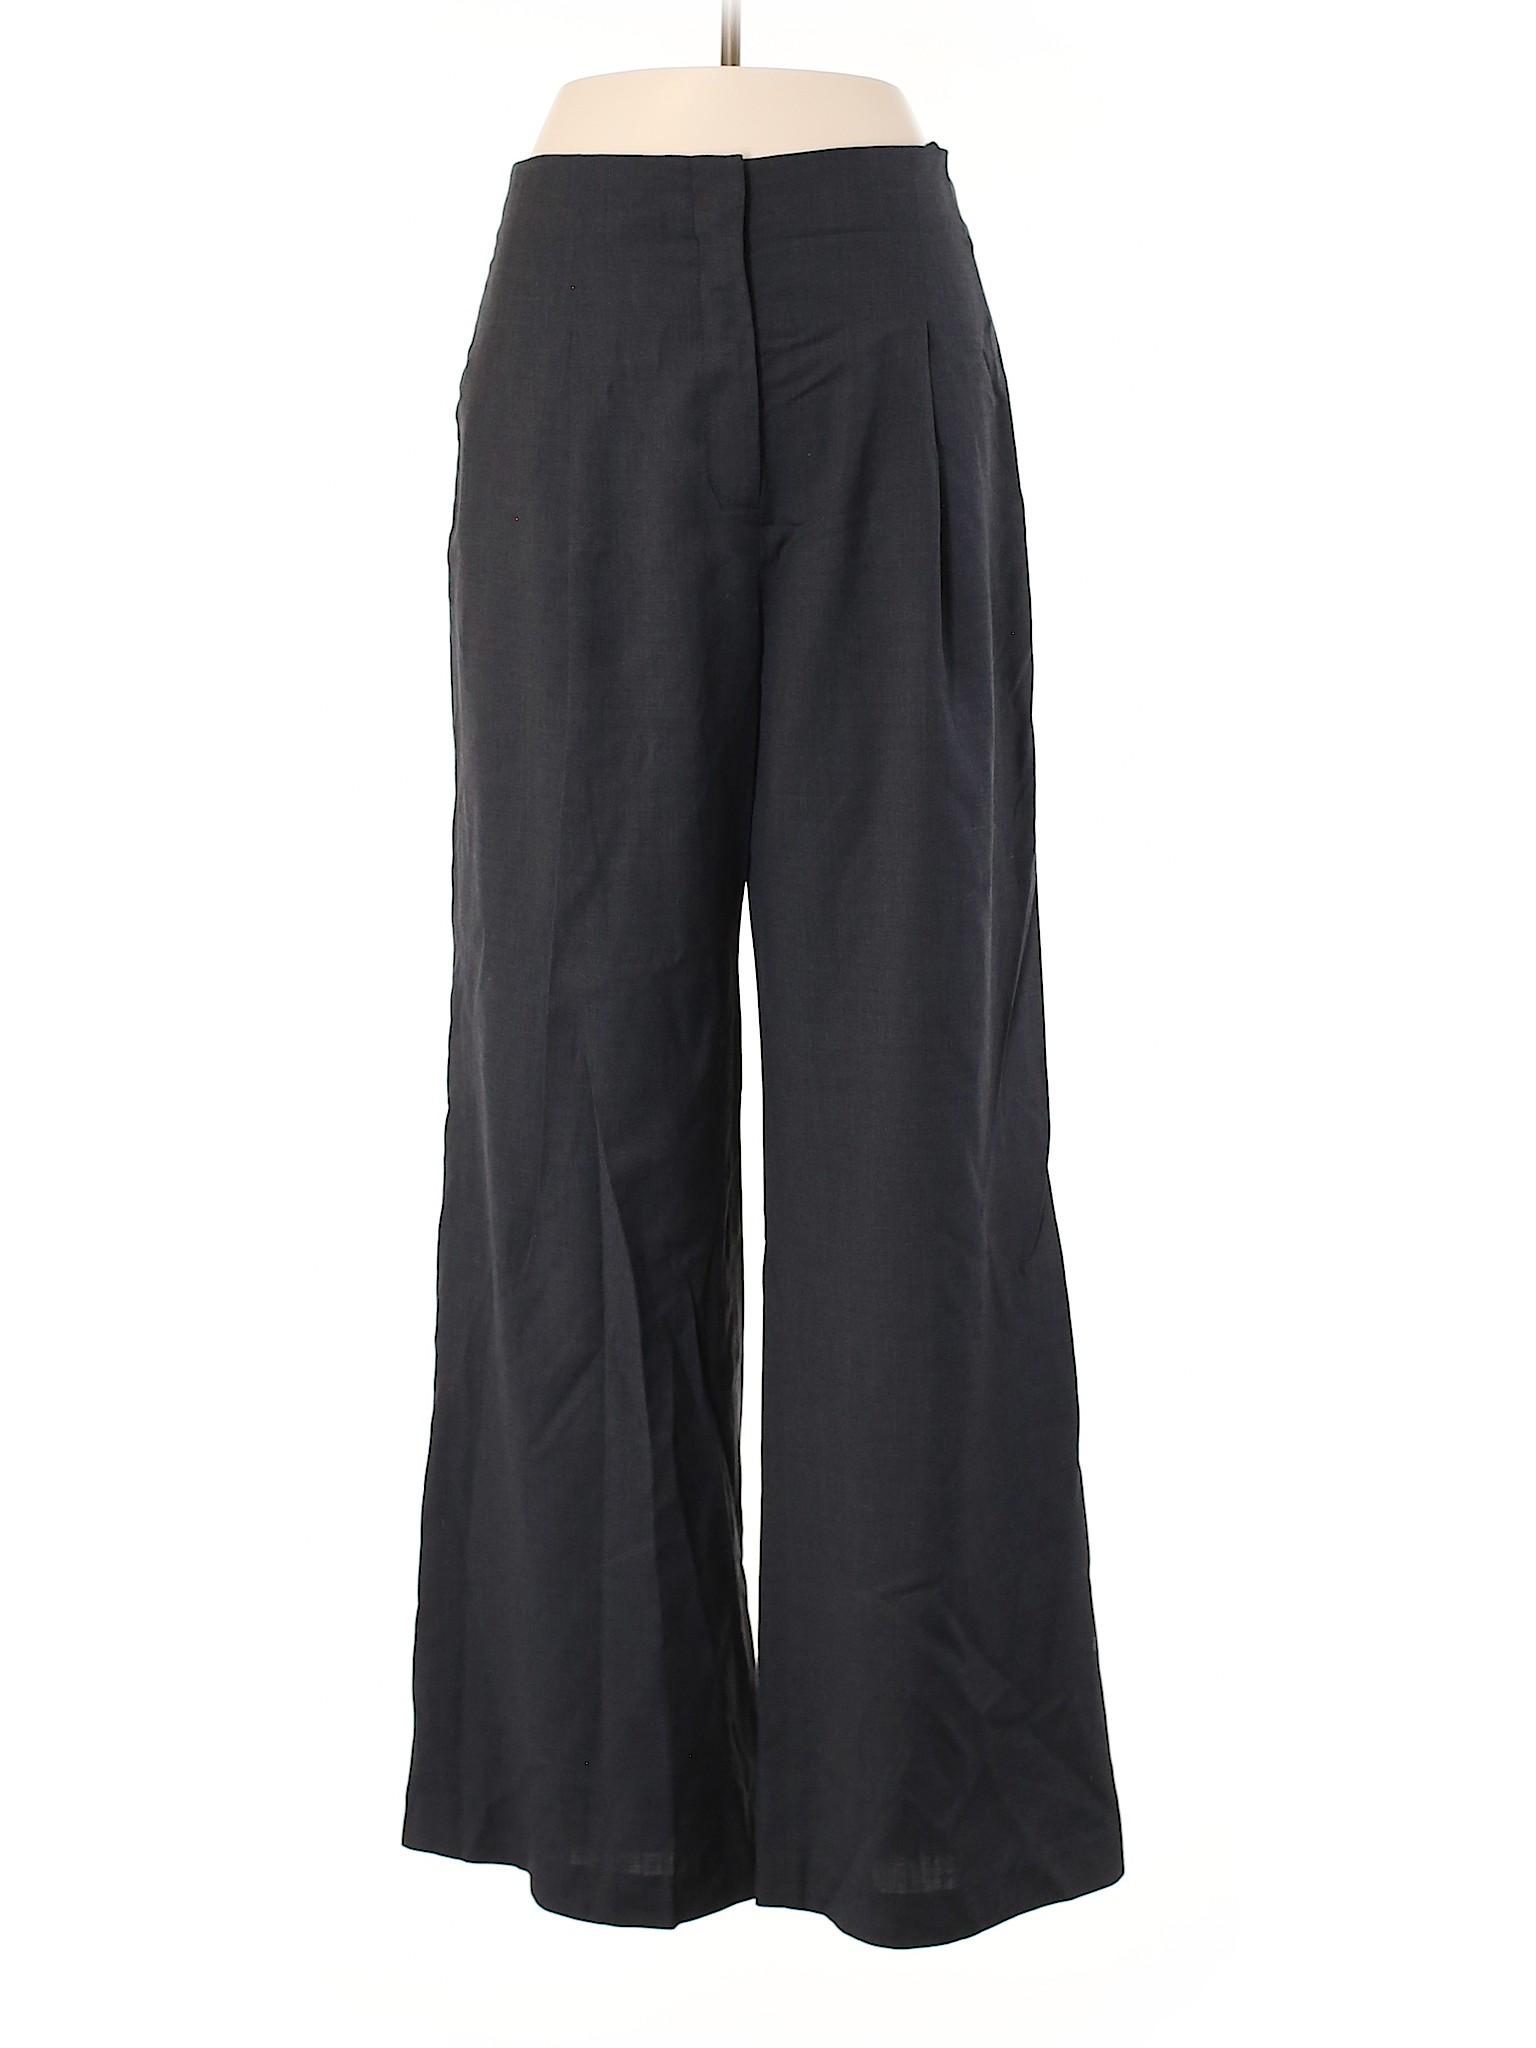 Magaschoni Women Black Wool Pants 8 | eBay